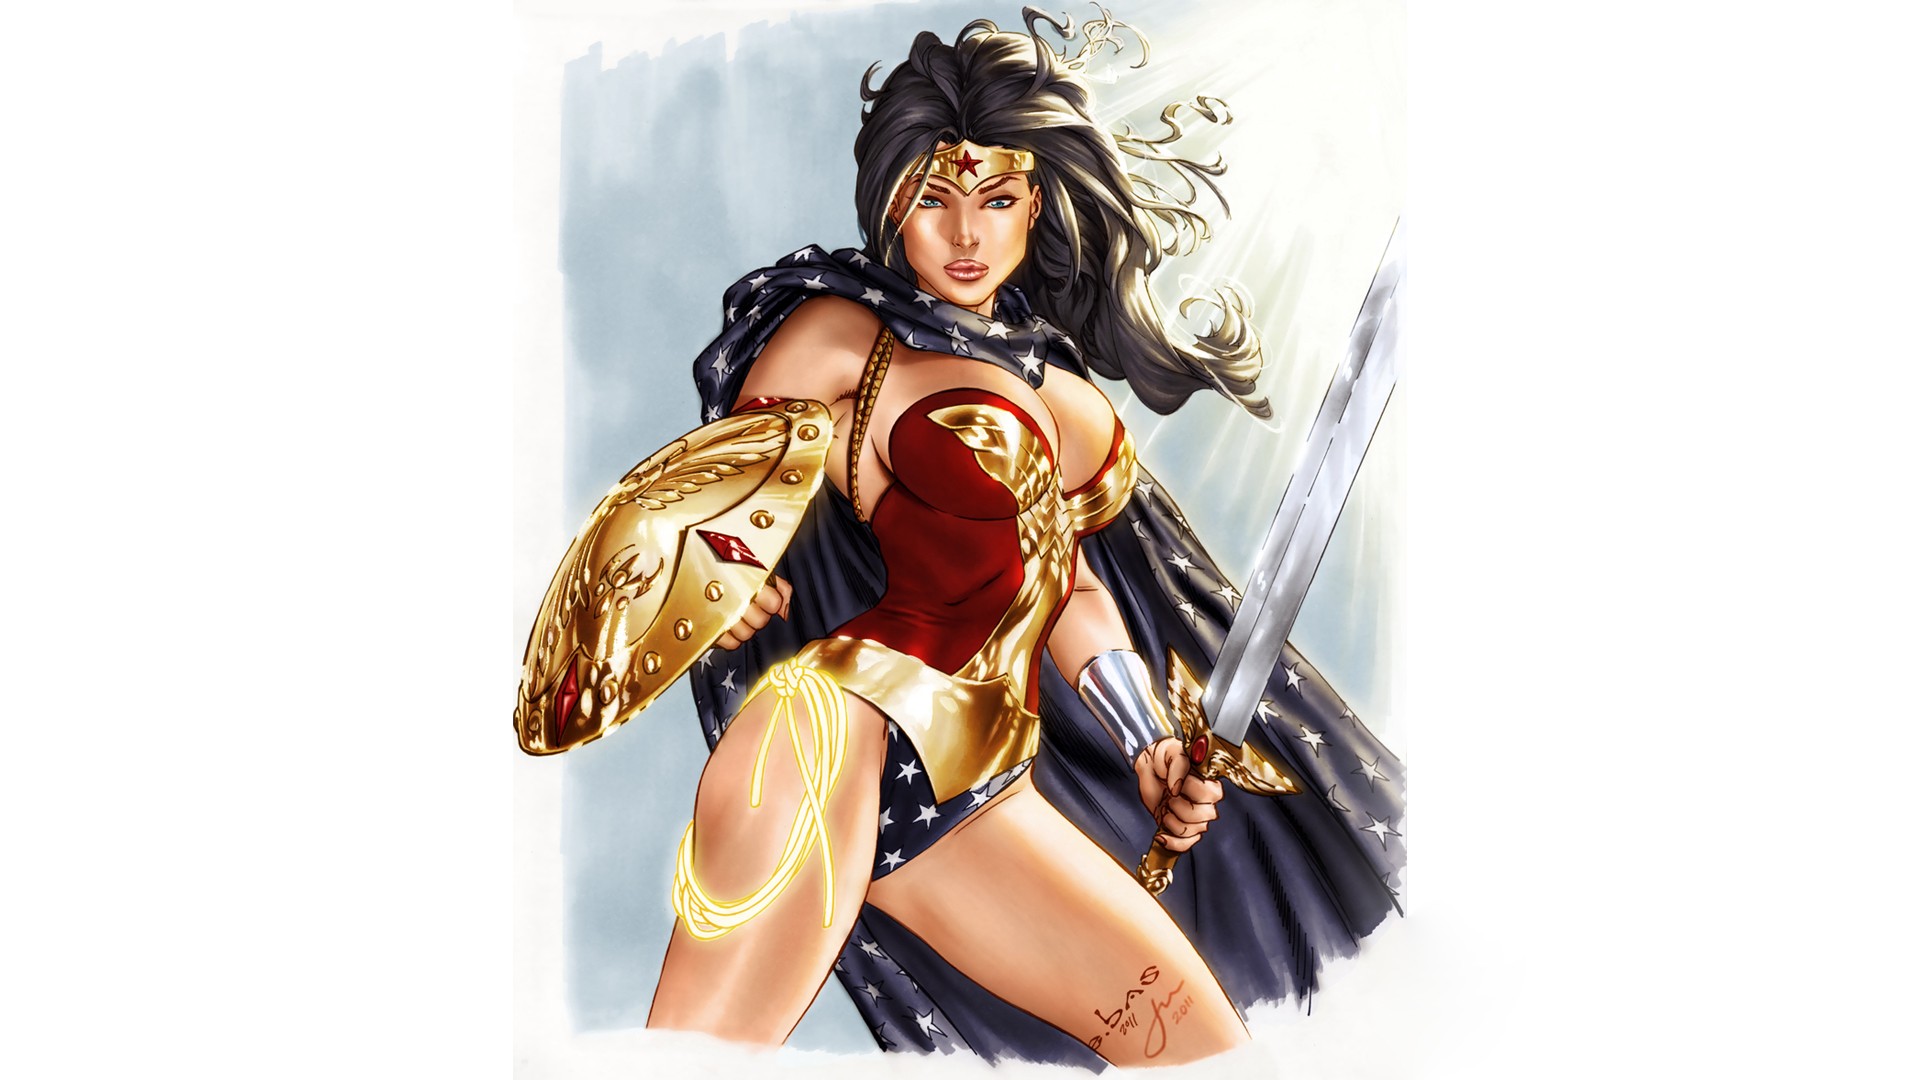 Wallpaper - Wonder Woman Large Breasts - HD Wallpaper 